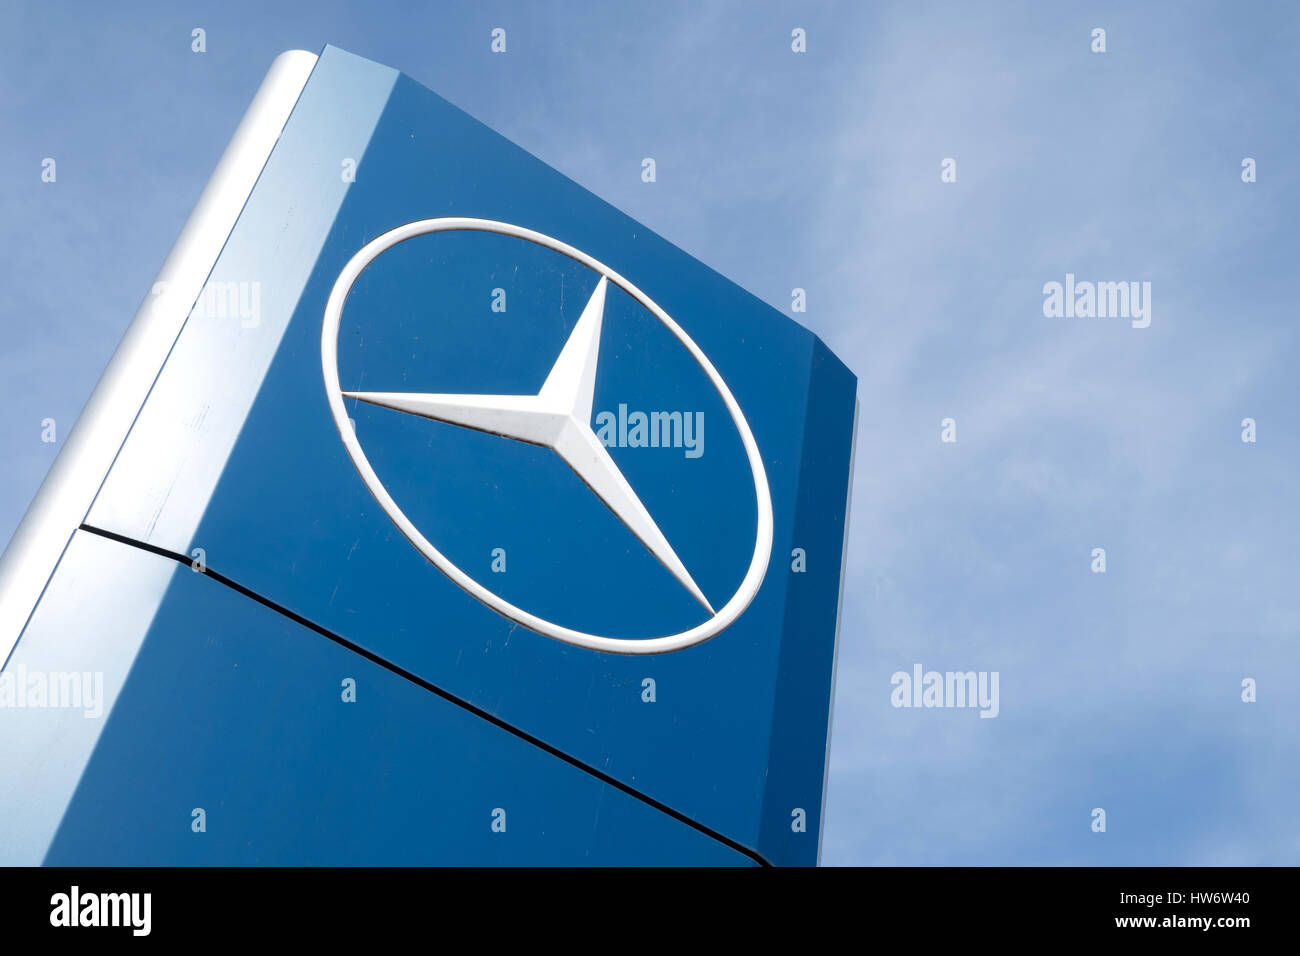 Mercedes-Benz dealership sign against blue sky Stock Photo